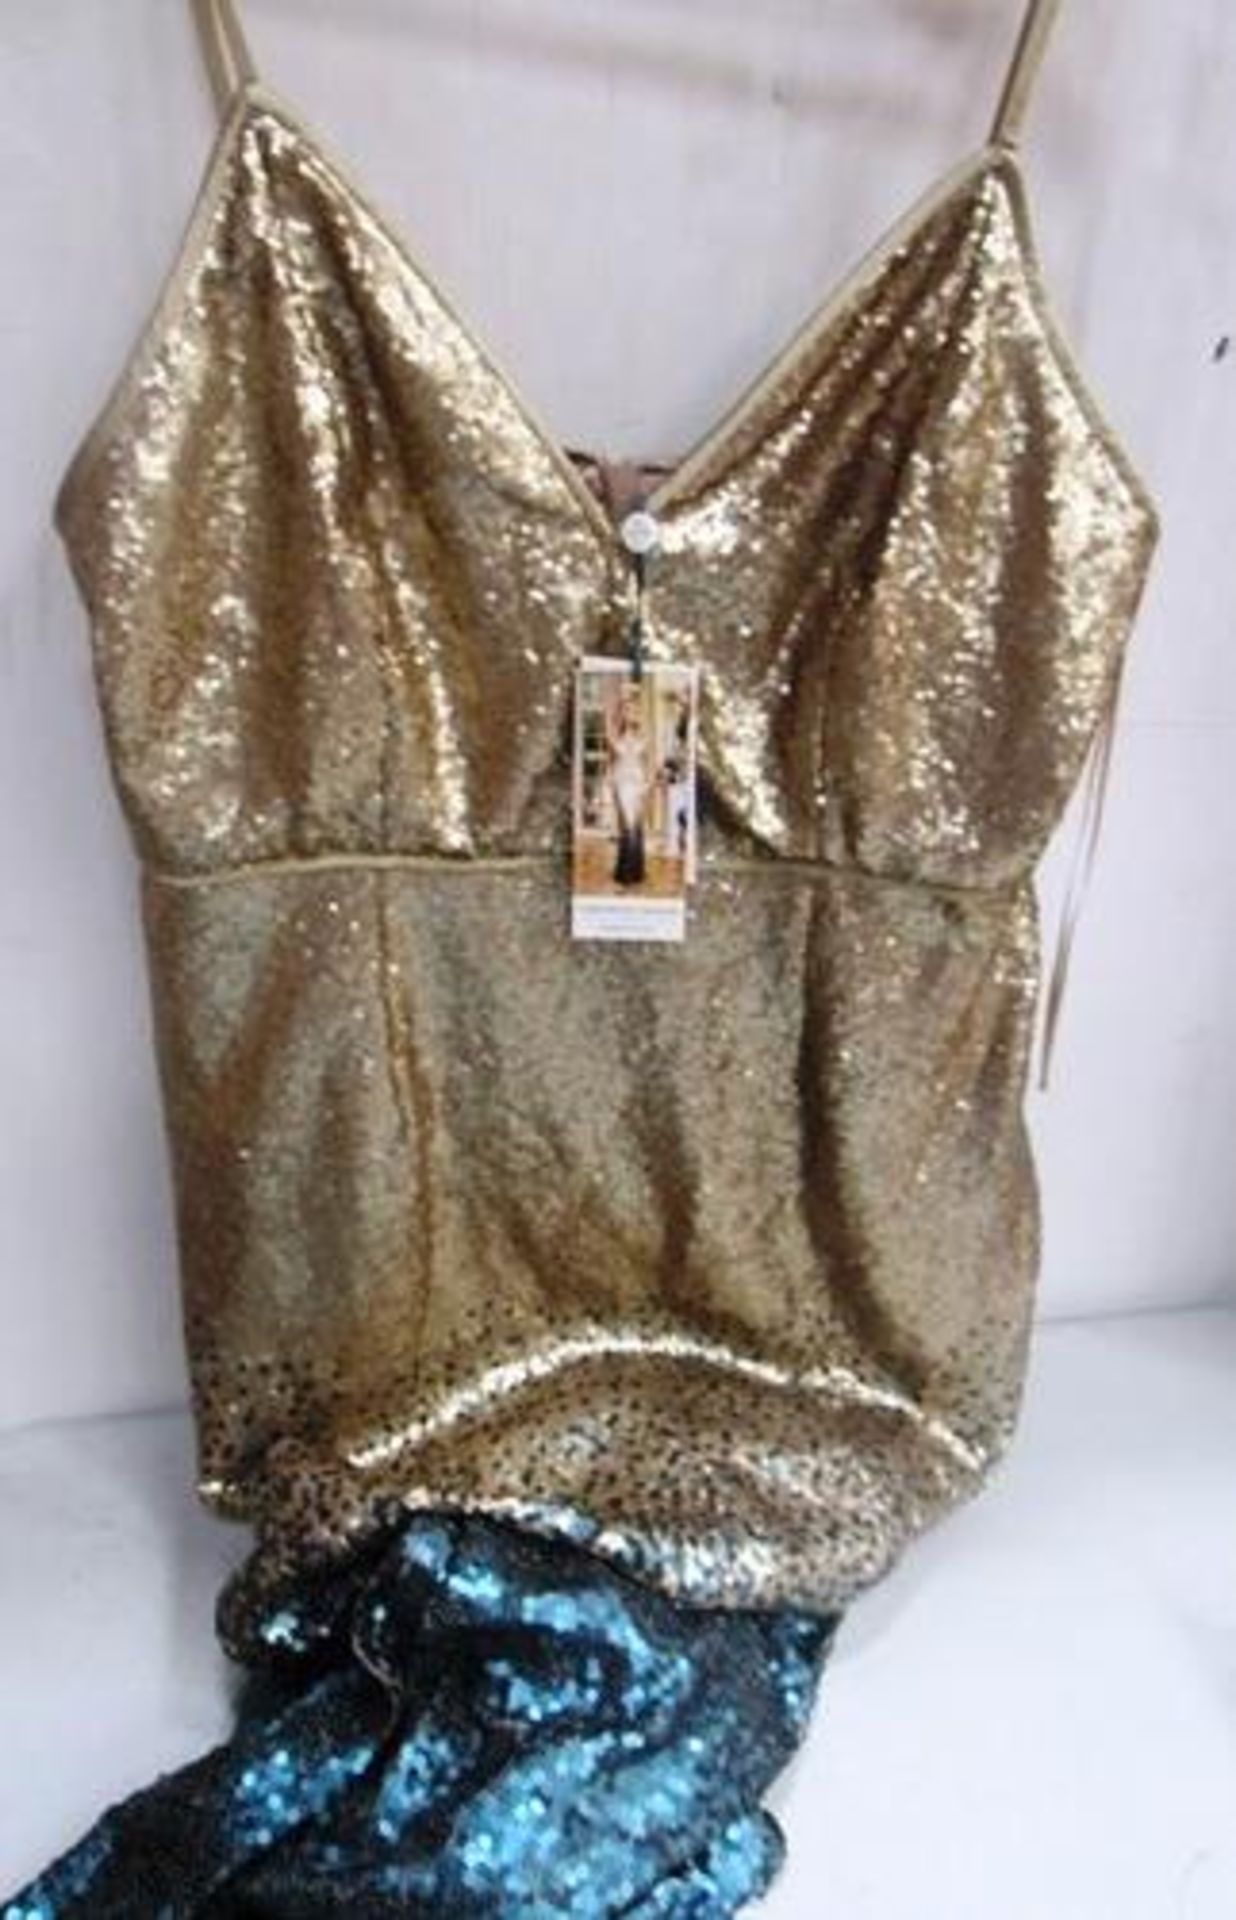 1 x Fenn Wright Manson by Amanda Holden, Amanda dress, size 16, RRP £329.00 - New with tags (1A)